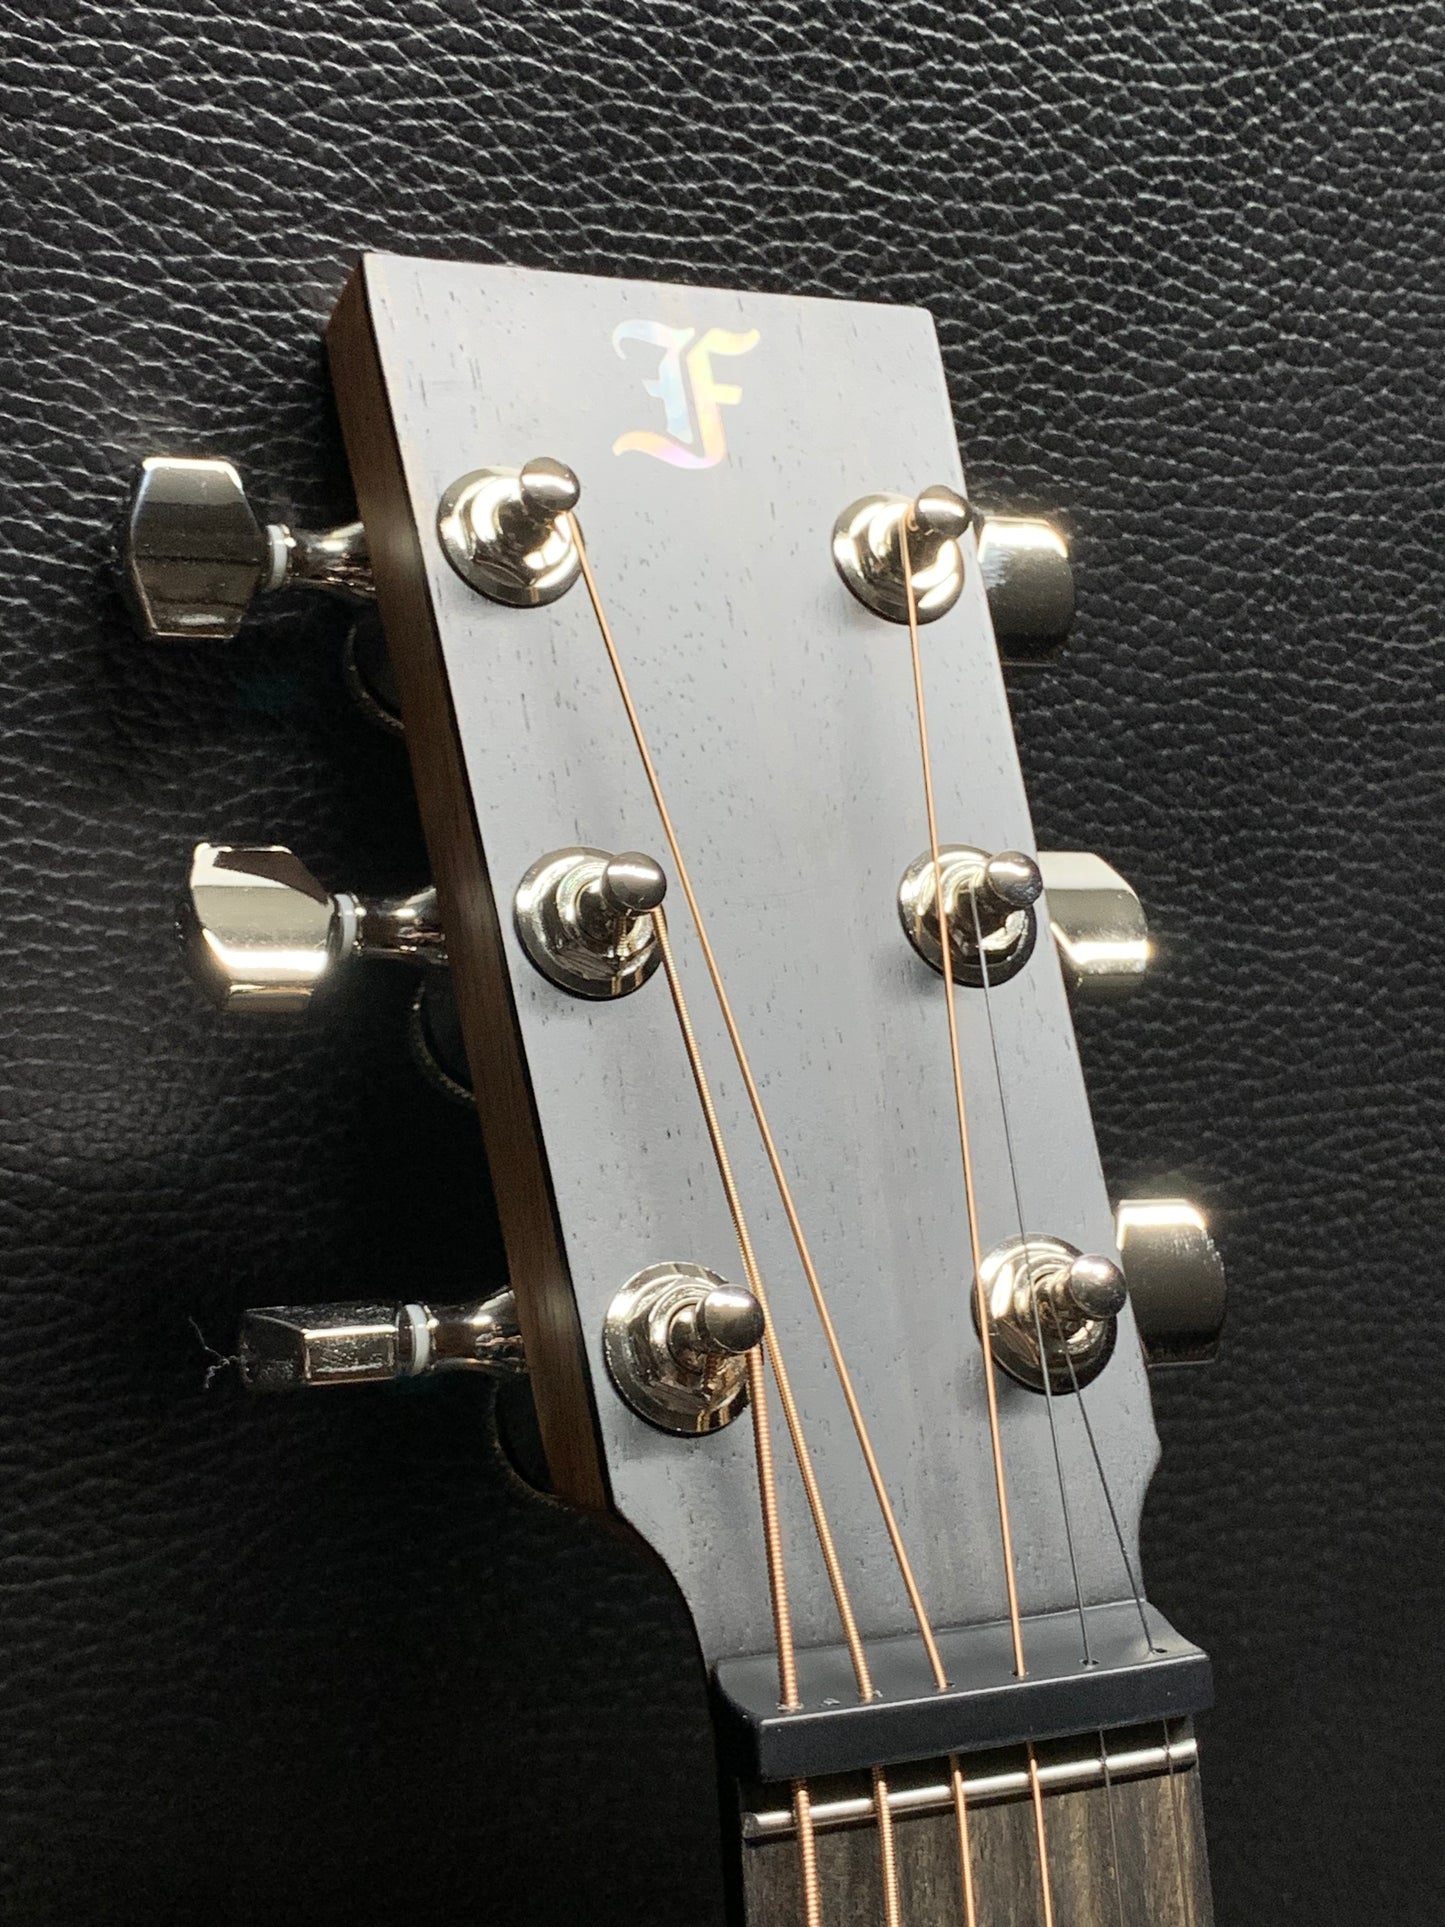 Furch Little Jane LJ10-CM Travel Guitar #118618